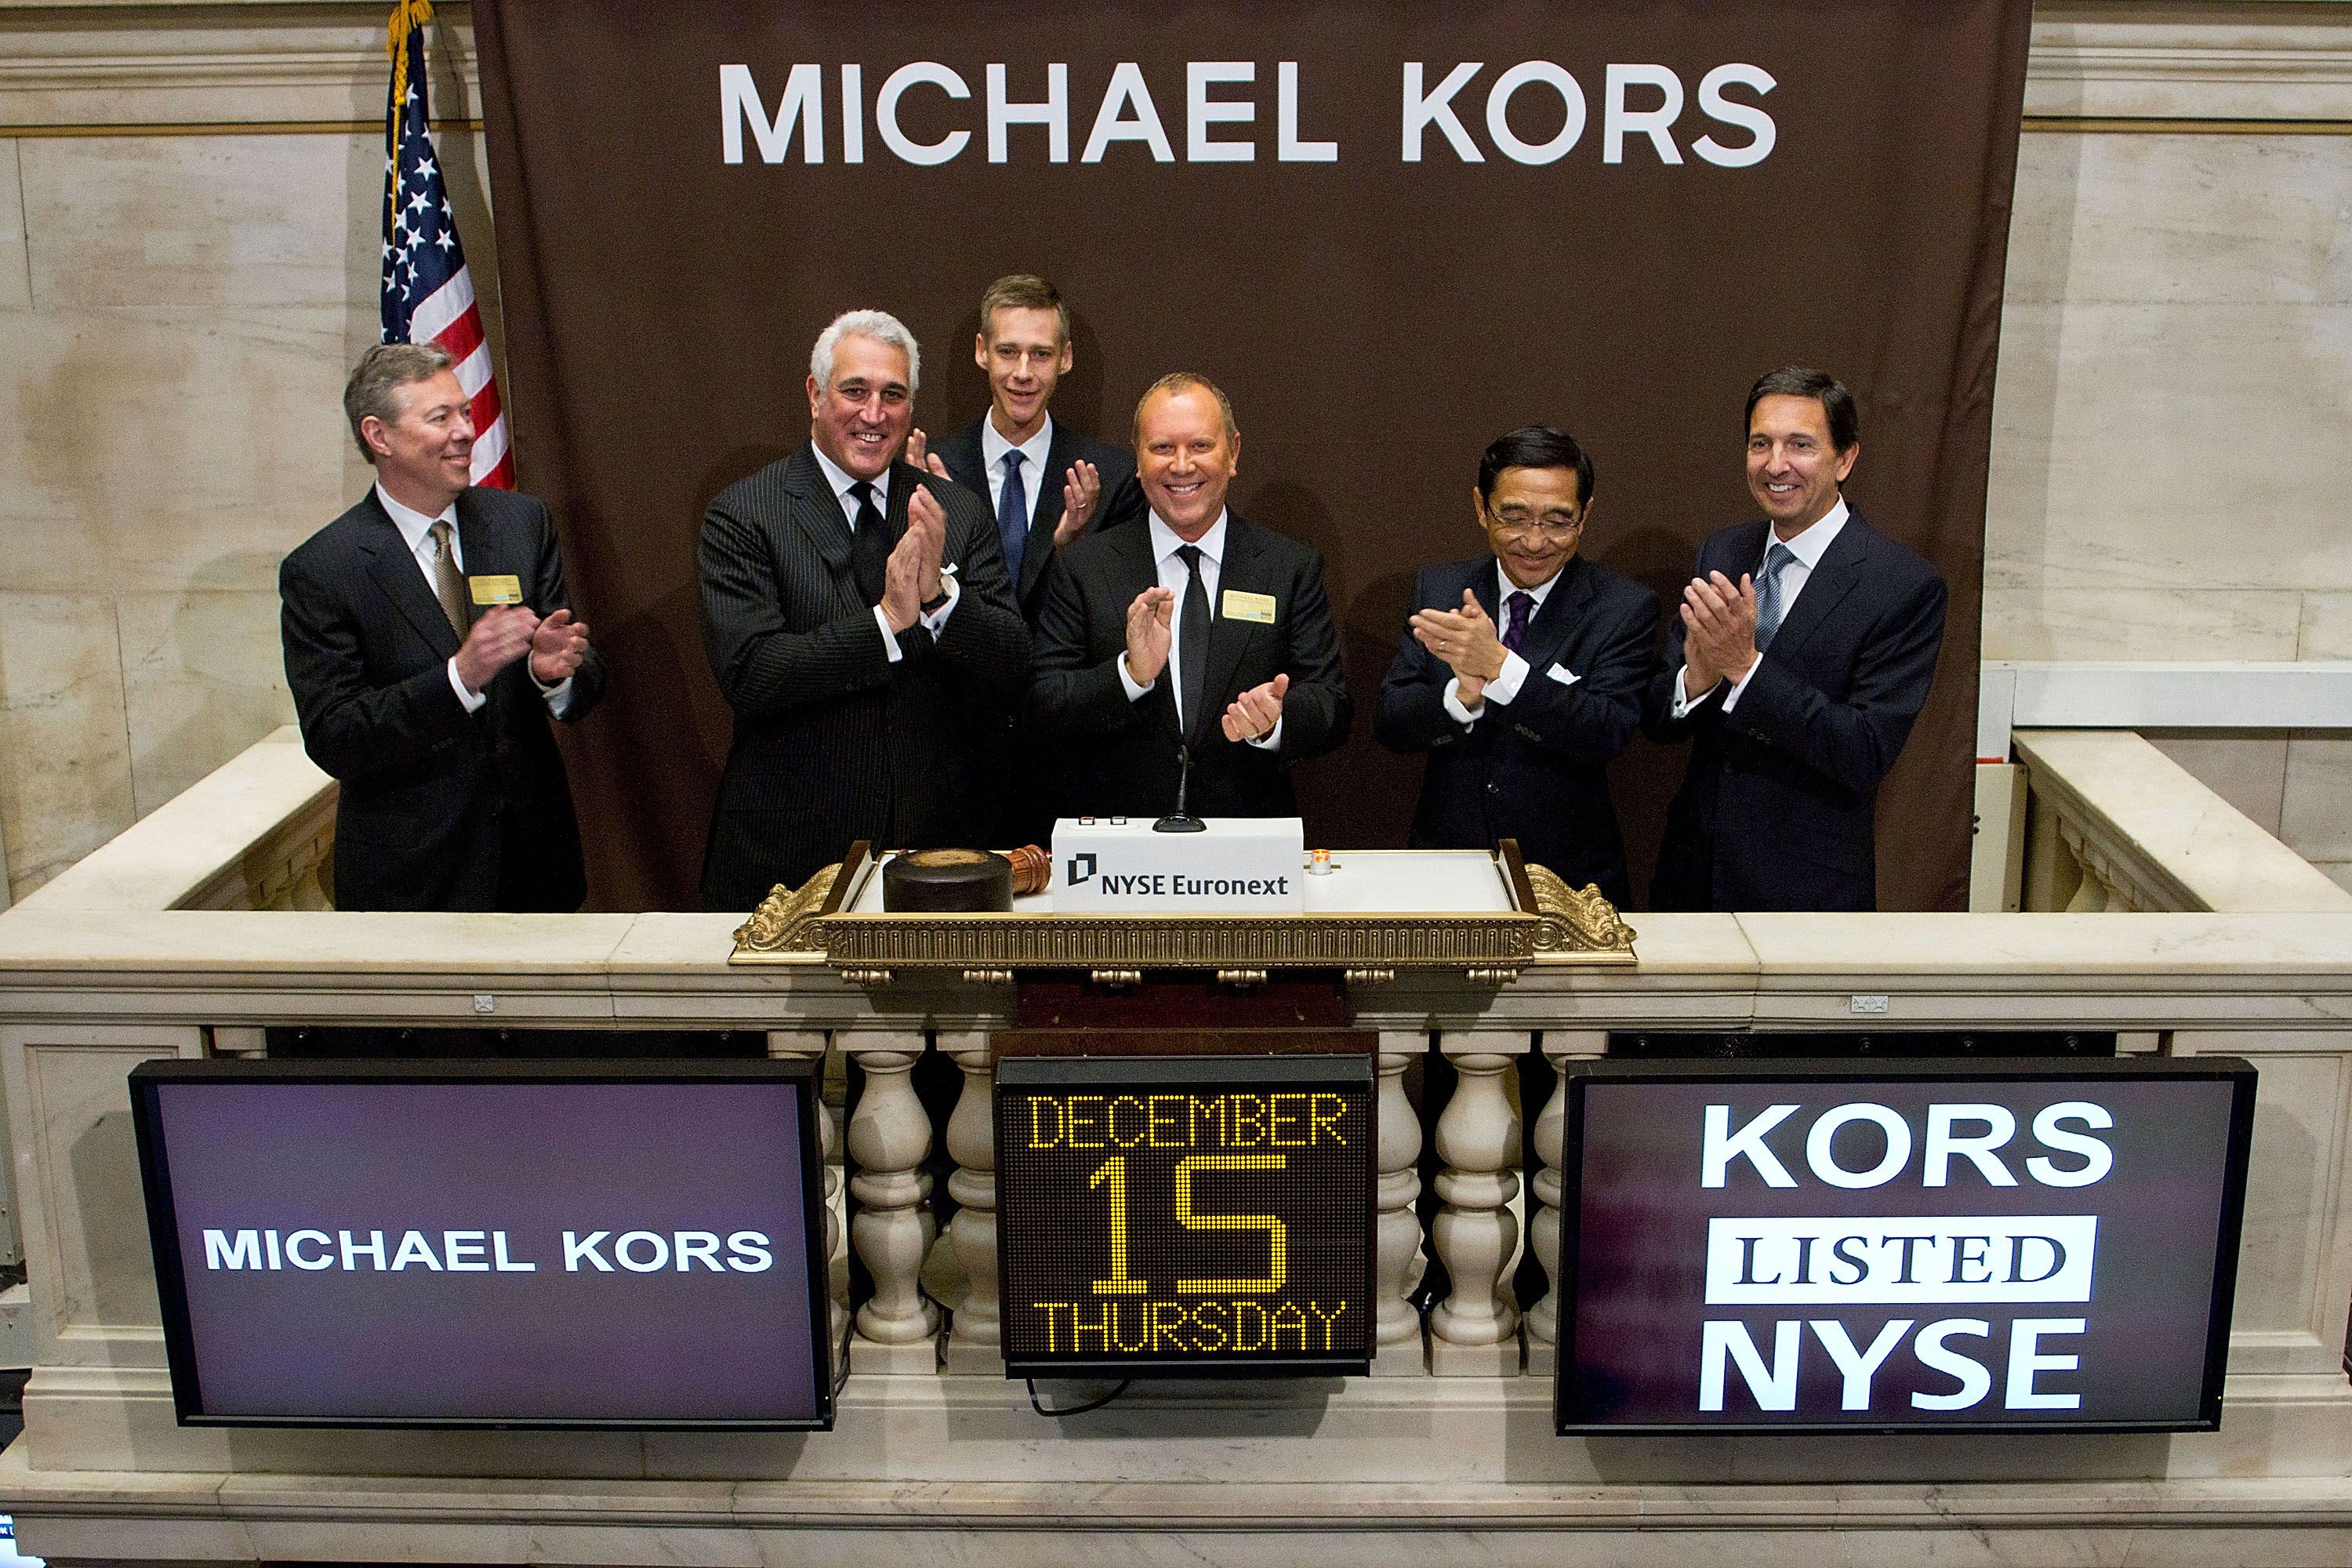 How Michael Kors Became a Billionaire